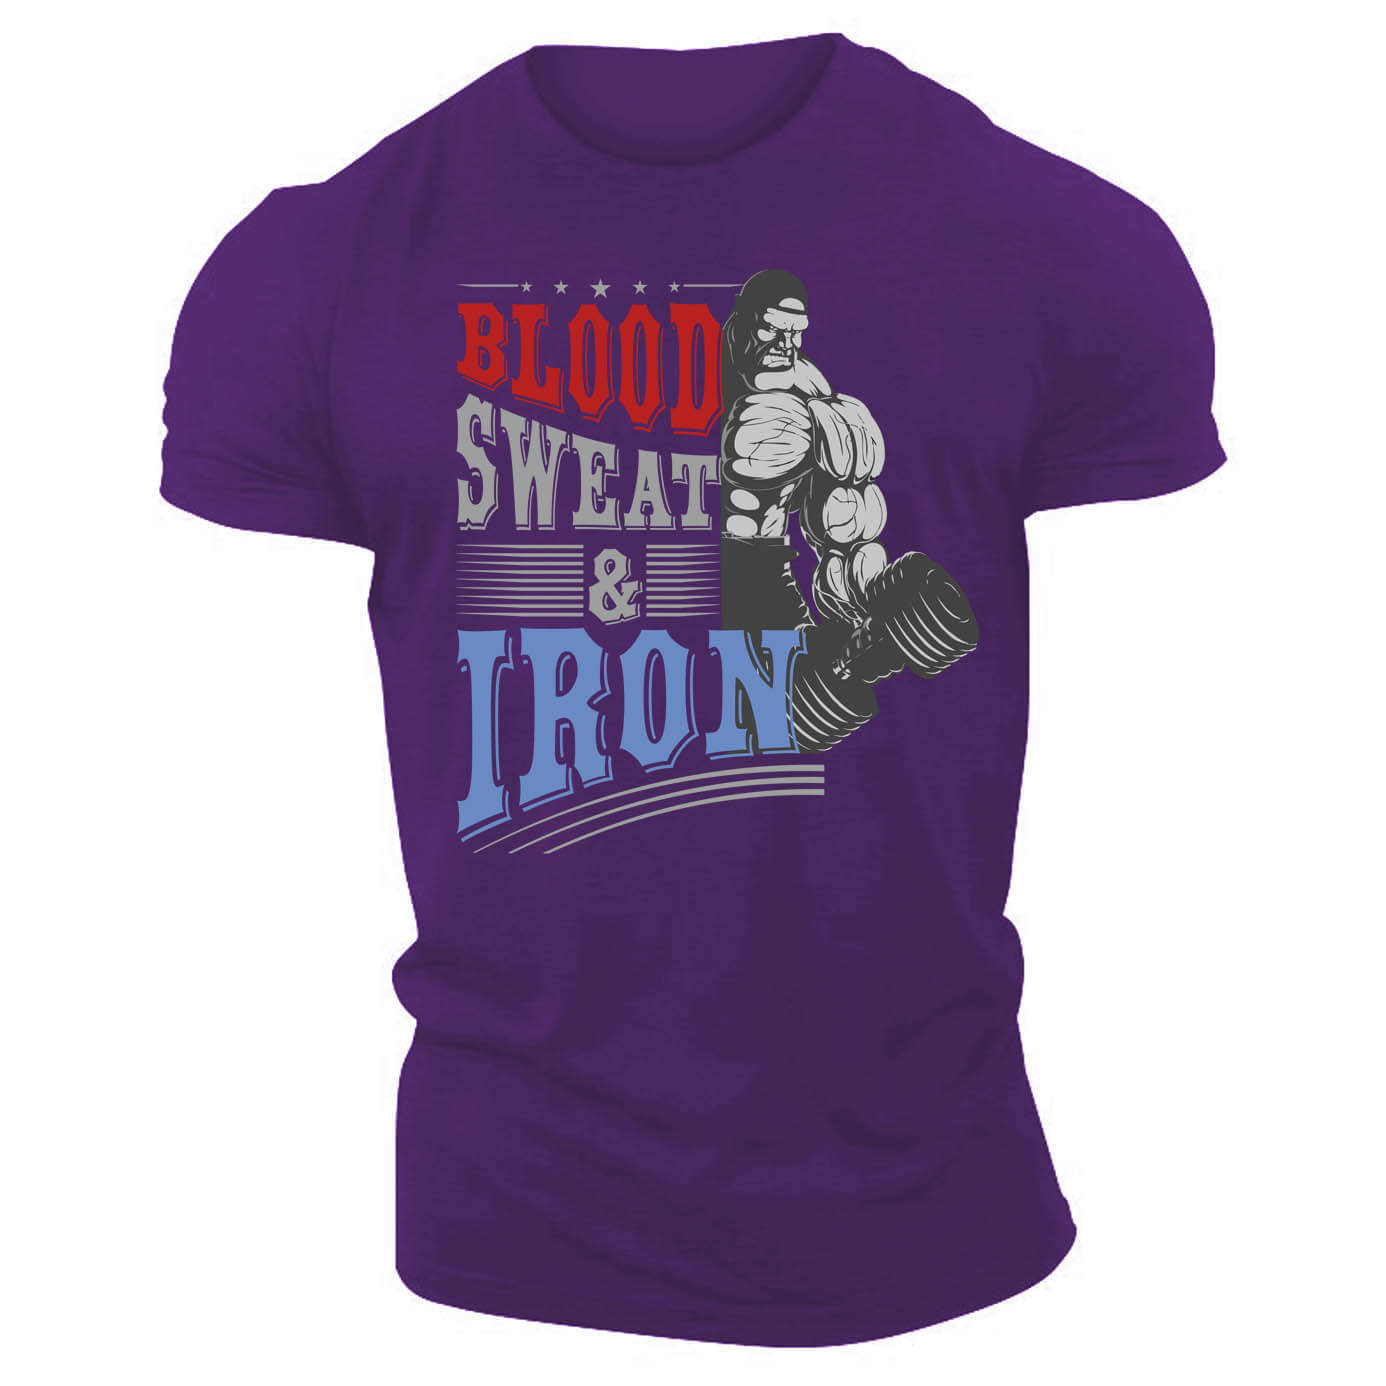 Blood Sweat & Iron Premium T-Shirt